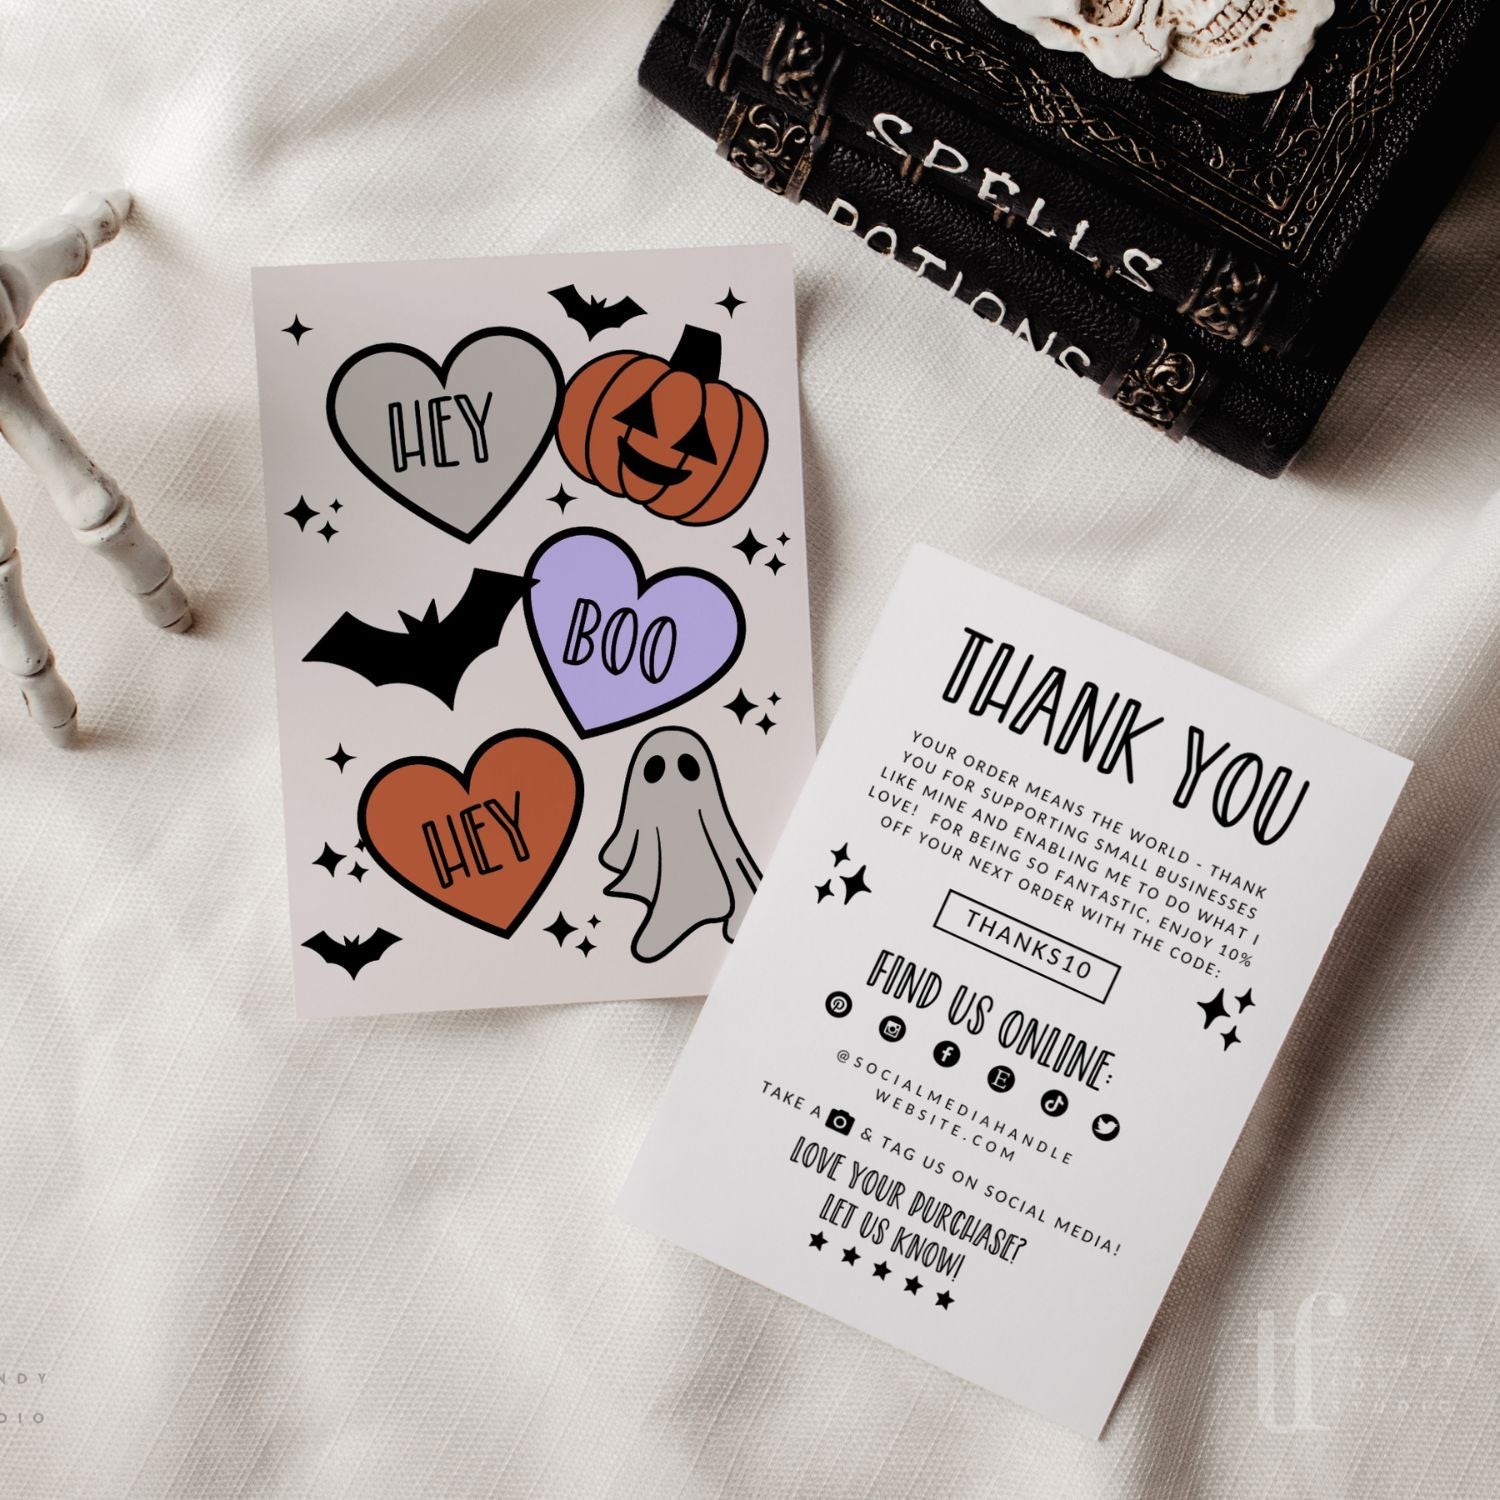 Hey Boo Retro Halloween Business Thank You Card Canva Template - Trendy Fox Studio